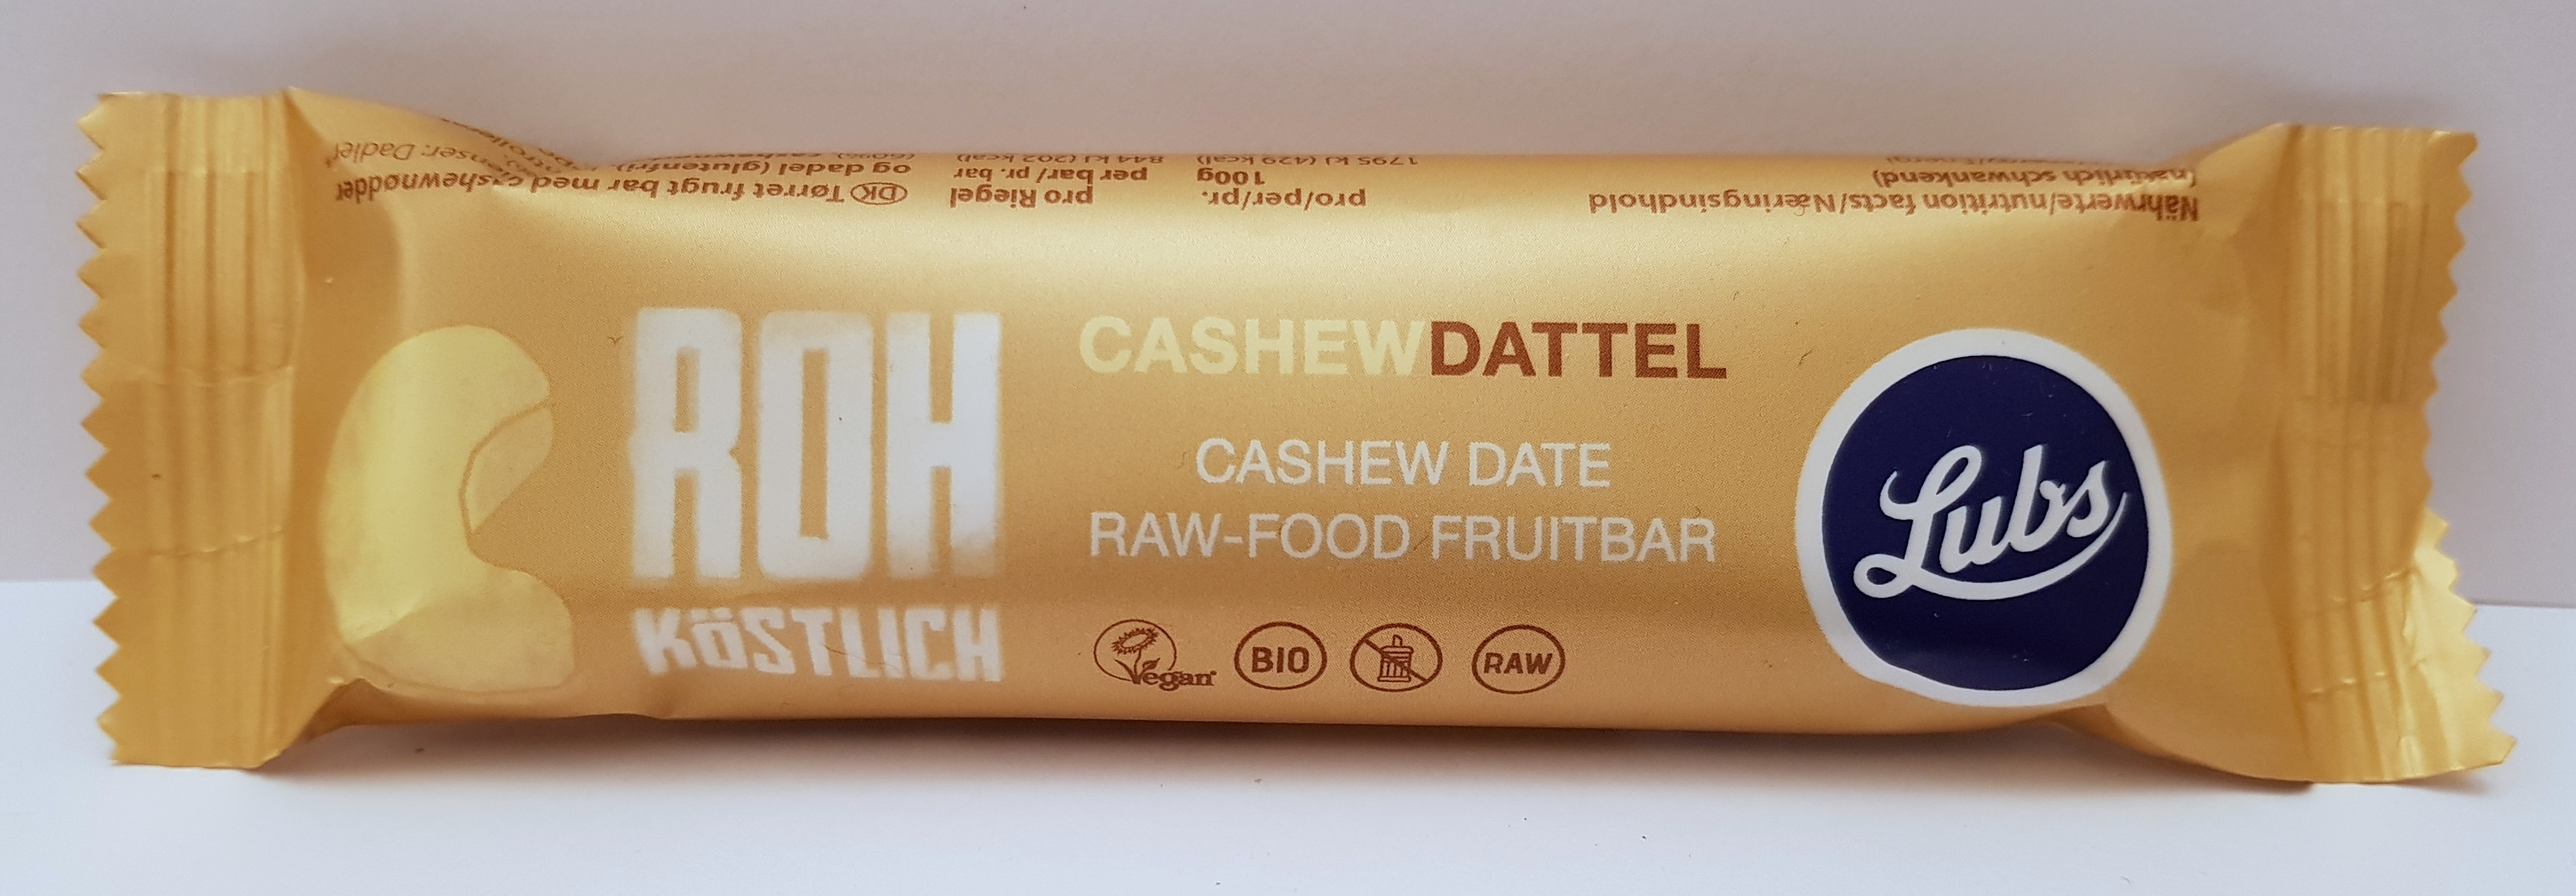 Cashew Datteln (Rohkost)